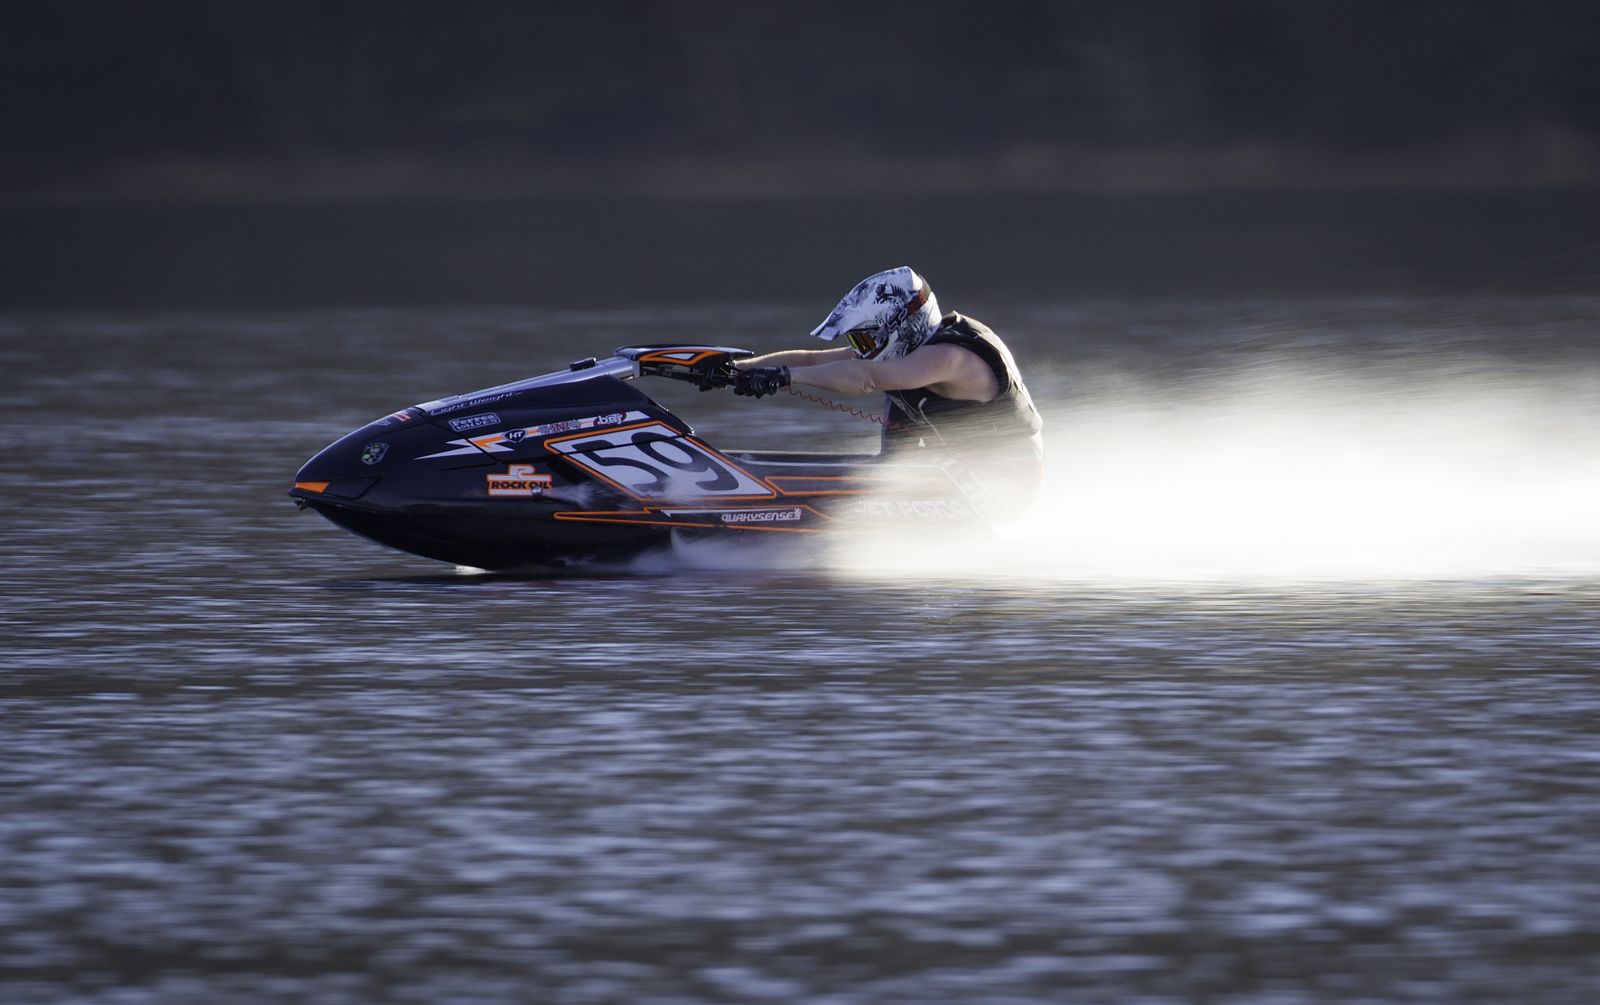 Graham Leech 3 x World & National water speed record holder in Ski F1, Sport GP & Ski 750 Modified